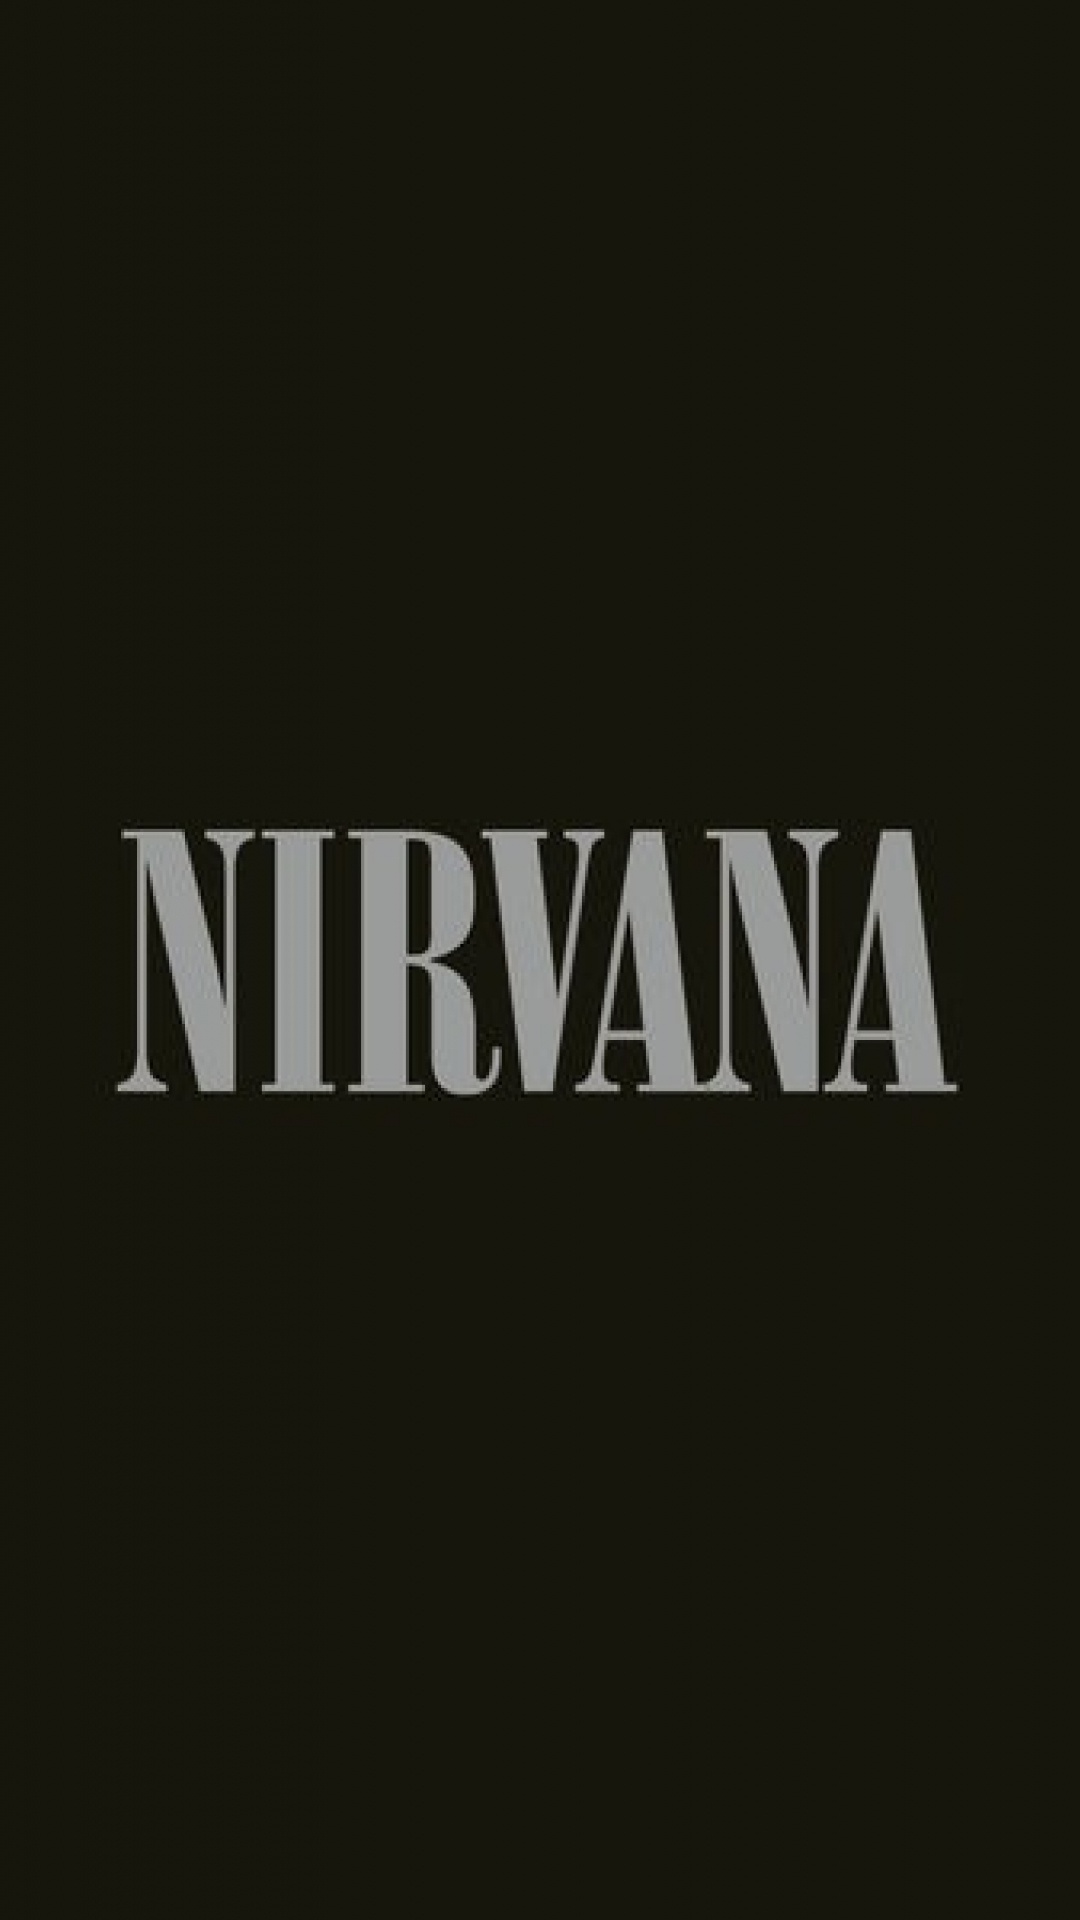 Nirvana, Album, Graphic Design, Text, Black. Wallpaper in 1080x1920 Resolution